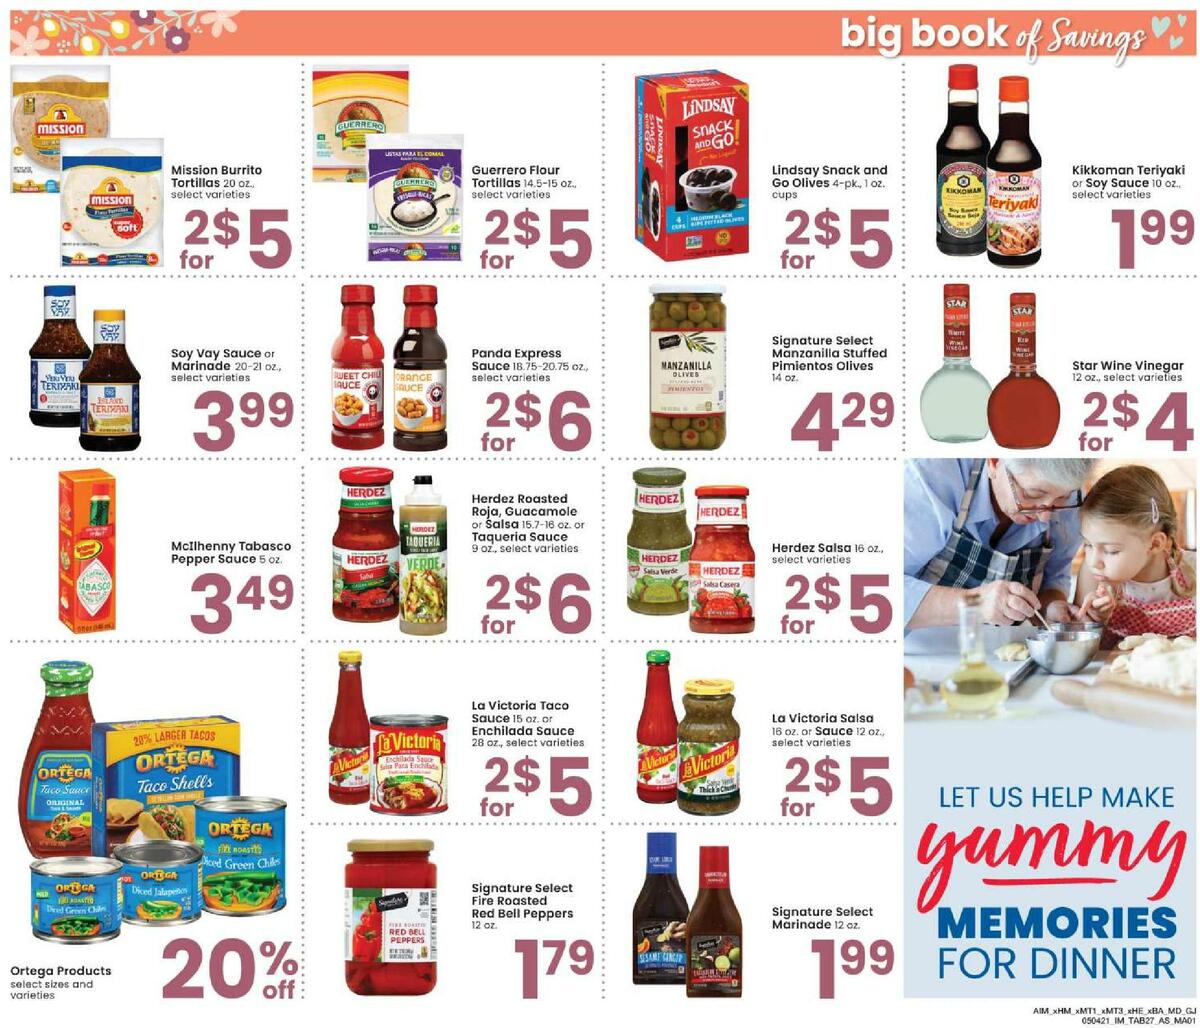 Albertsons Big Book of Savings Weekly Ad from May 4